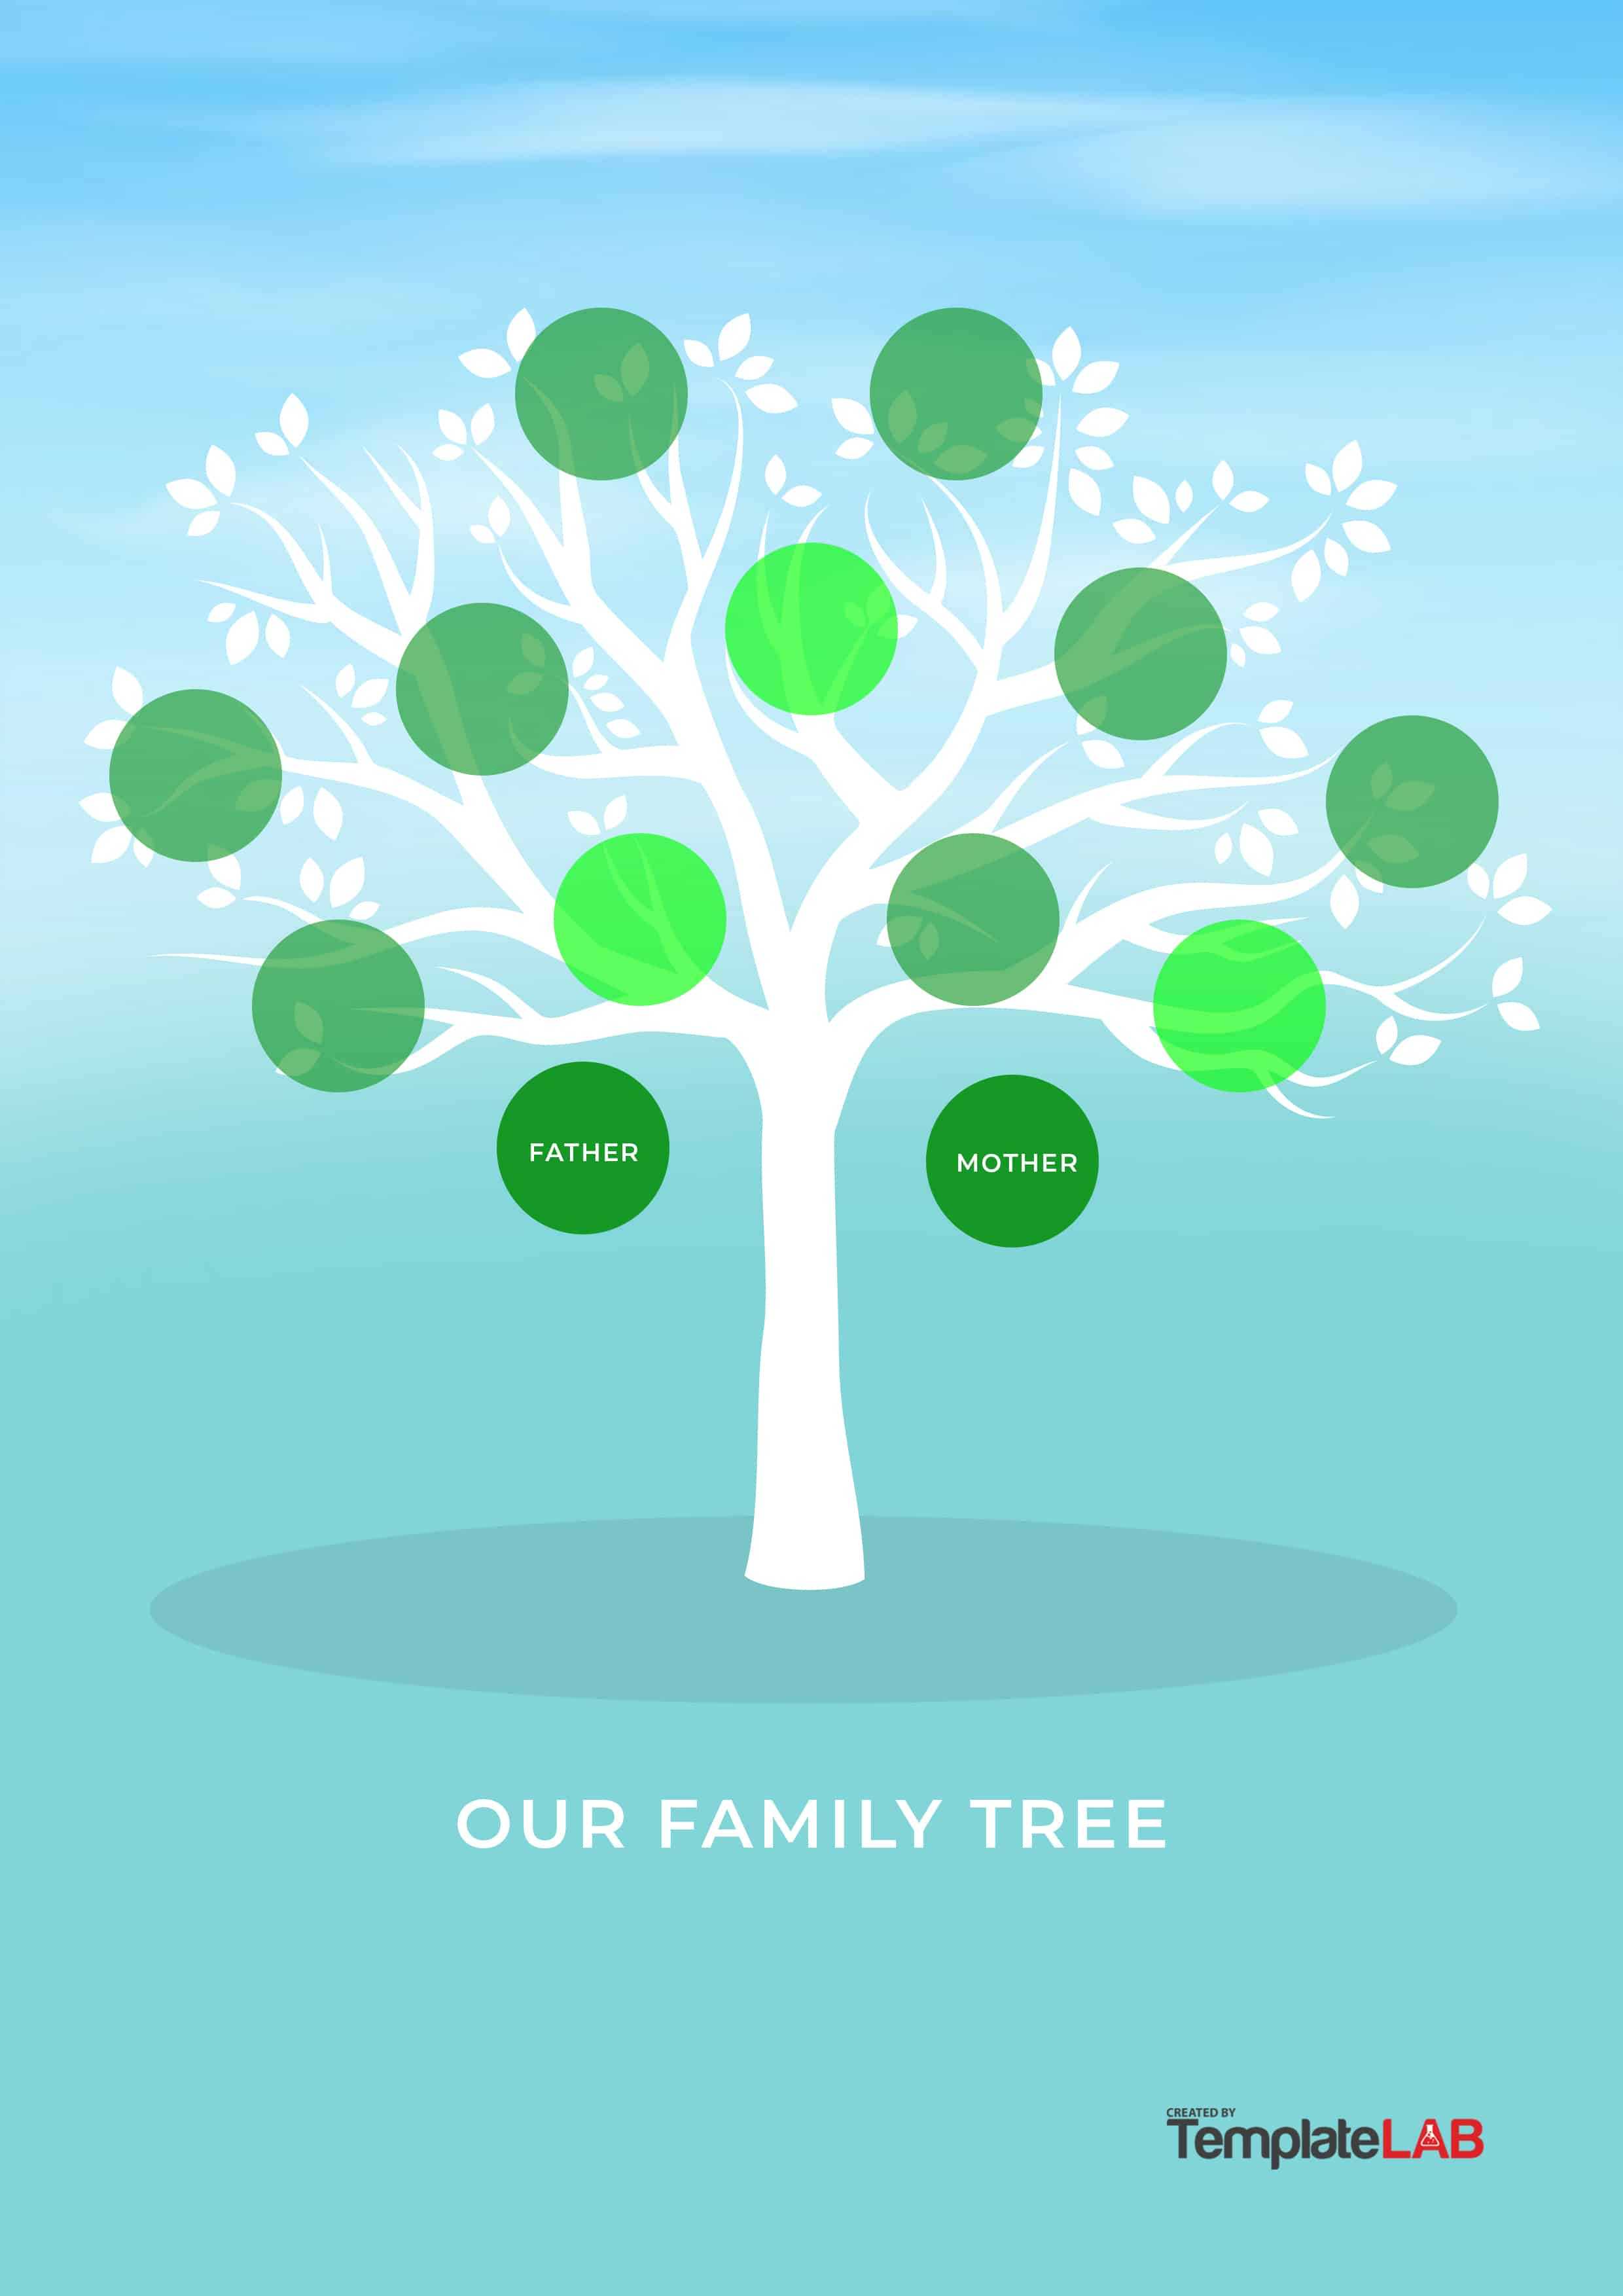 50+ Free Family Tree Templates (Word, Excel, Pdf) ᐅ Regarding 3 Generation Family Tree Template Word